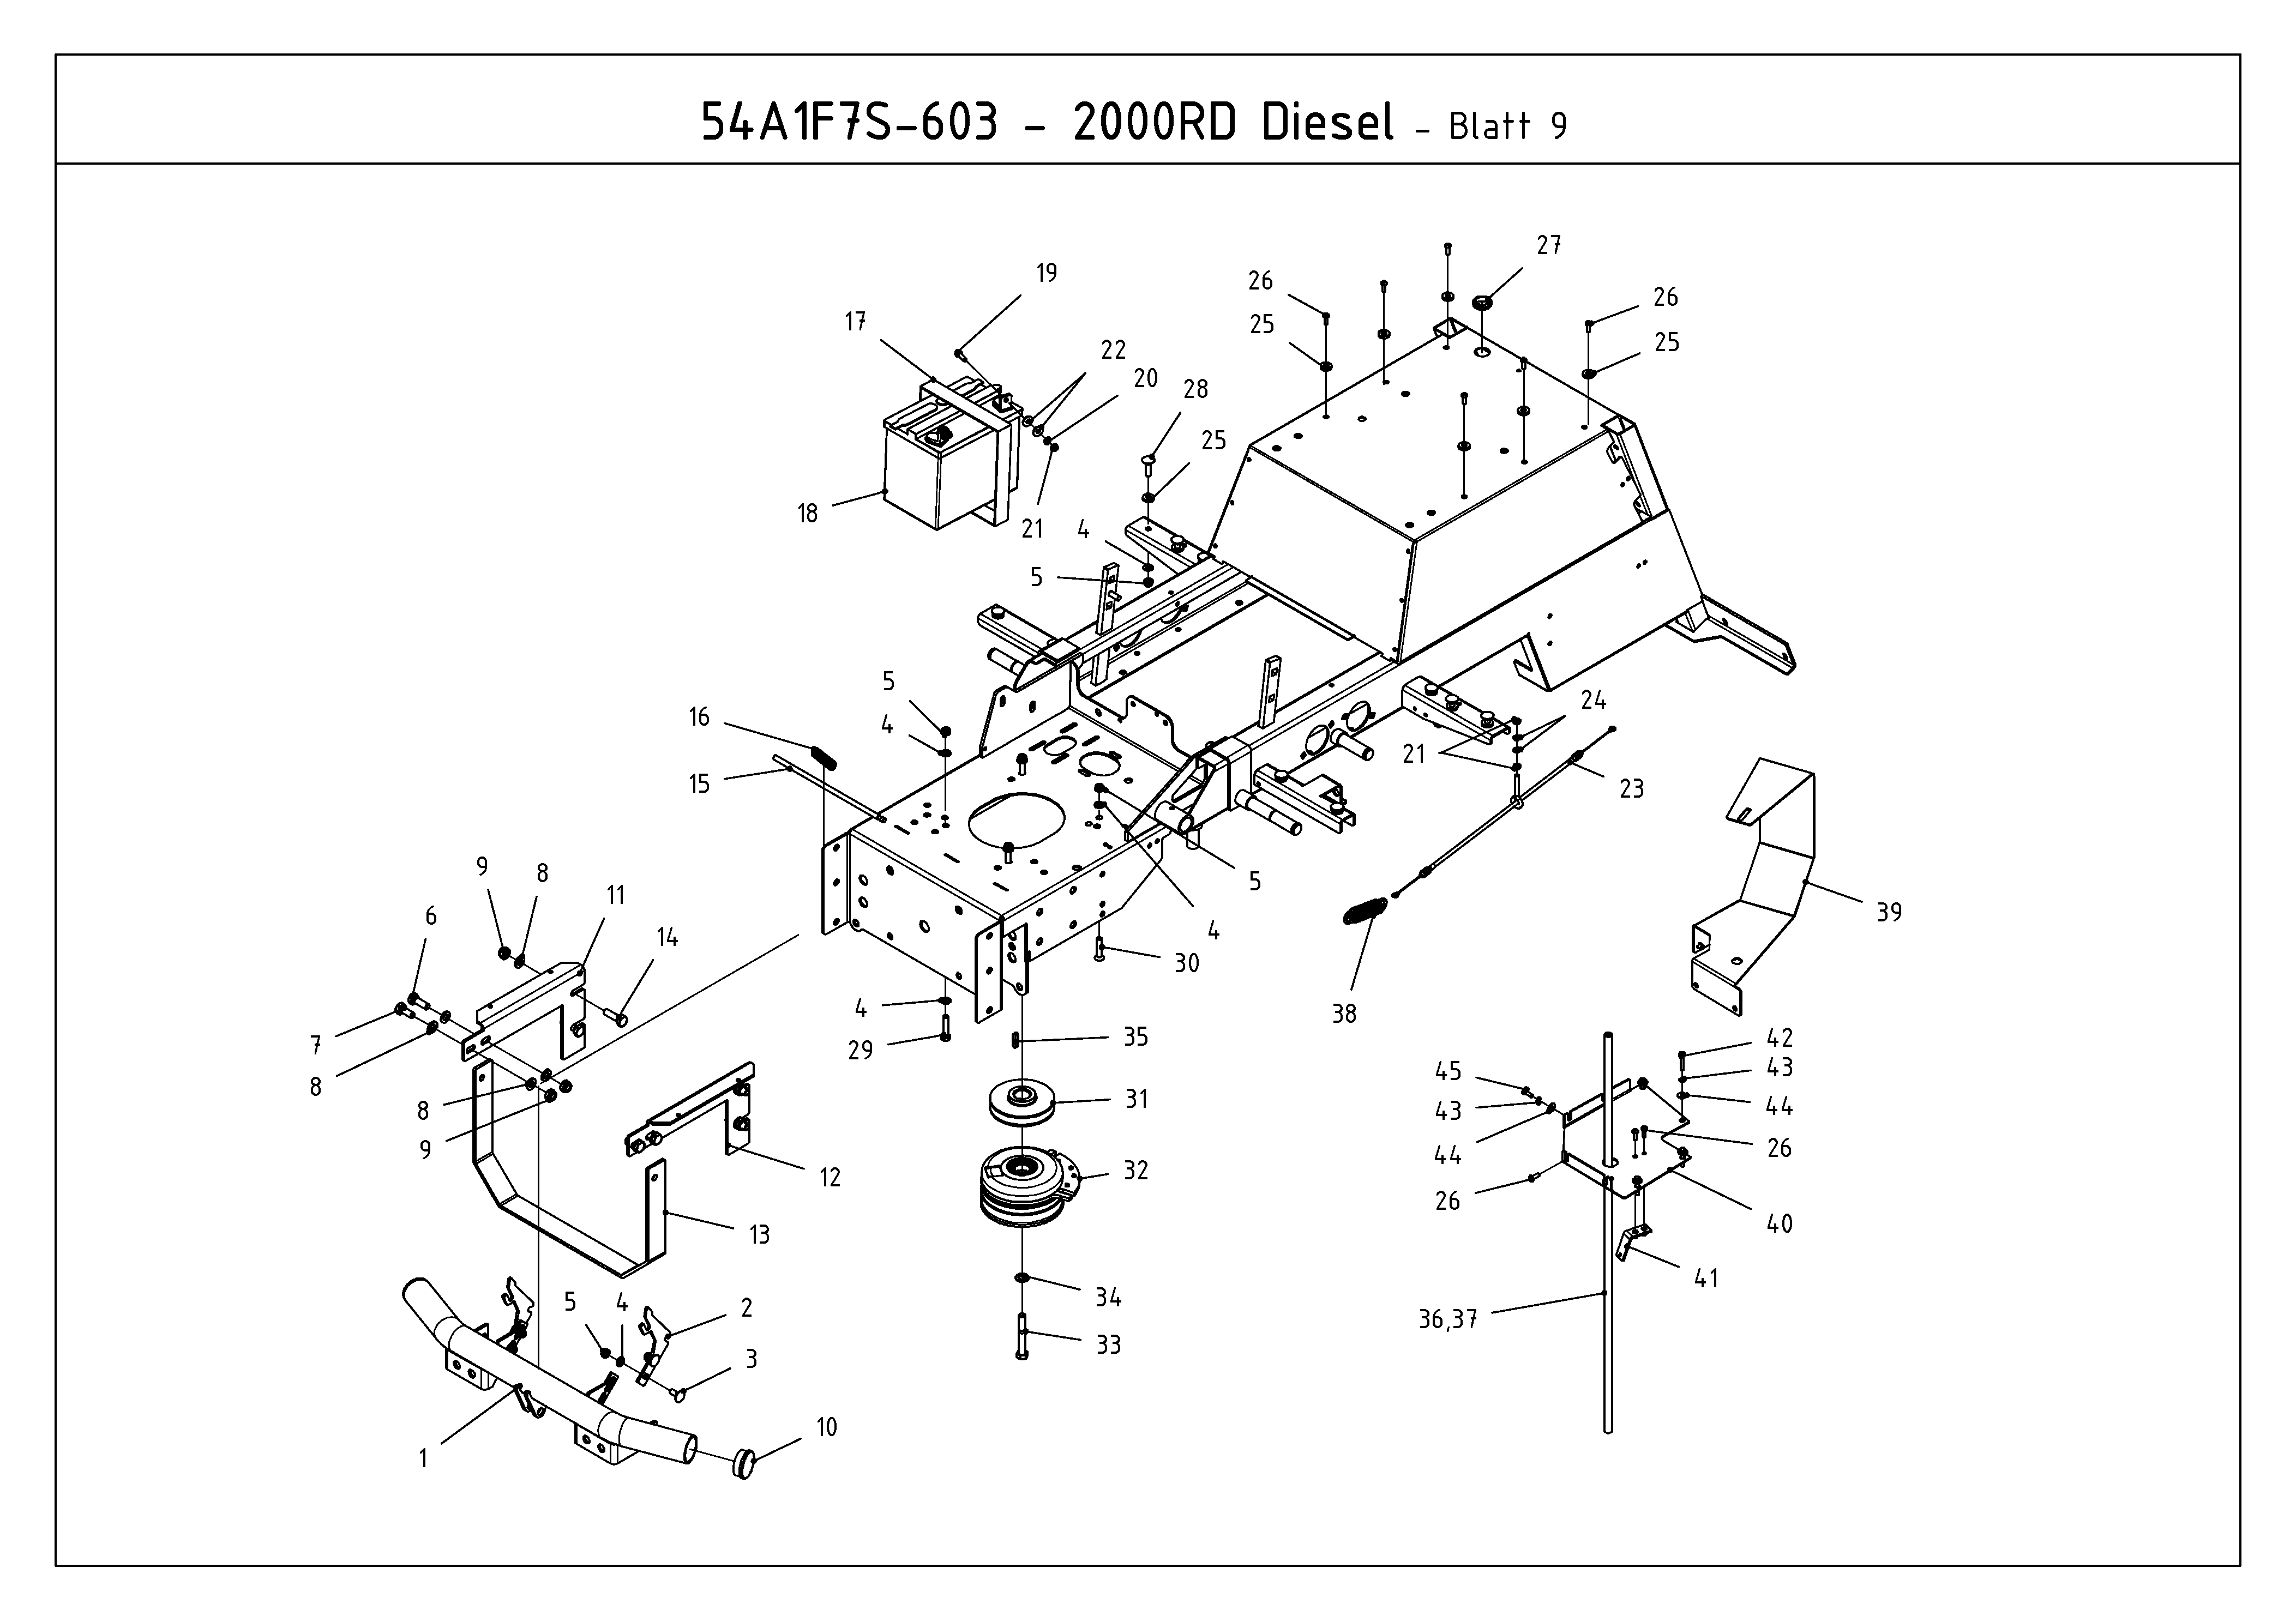 Cub Cadet, Kompakttraktoren, CC 2000 RD, 54A1F7S-603 (2009), Batterie, Elektromagentkupplung, MTD Ersatzteil-Zeichnungen